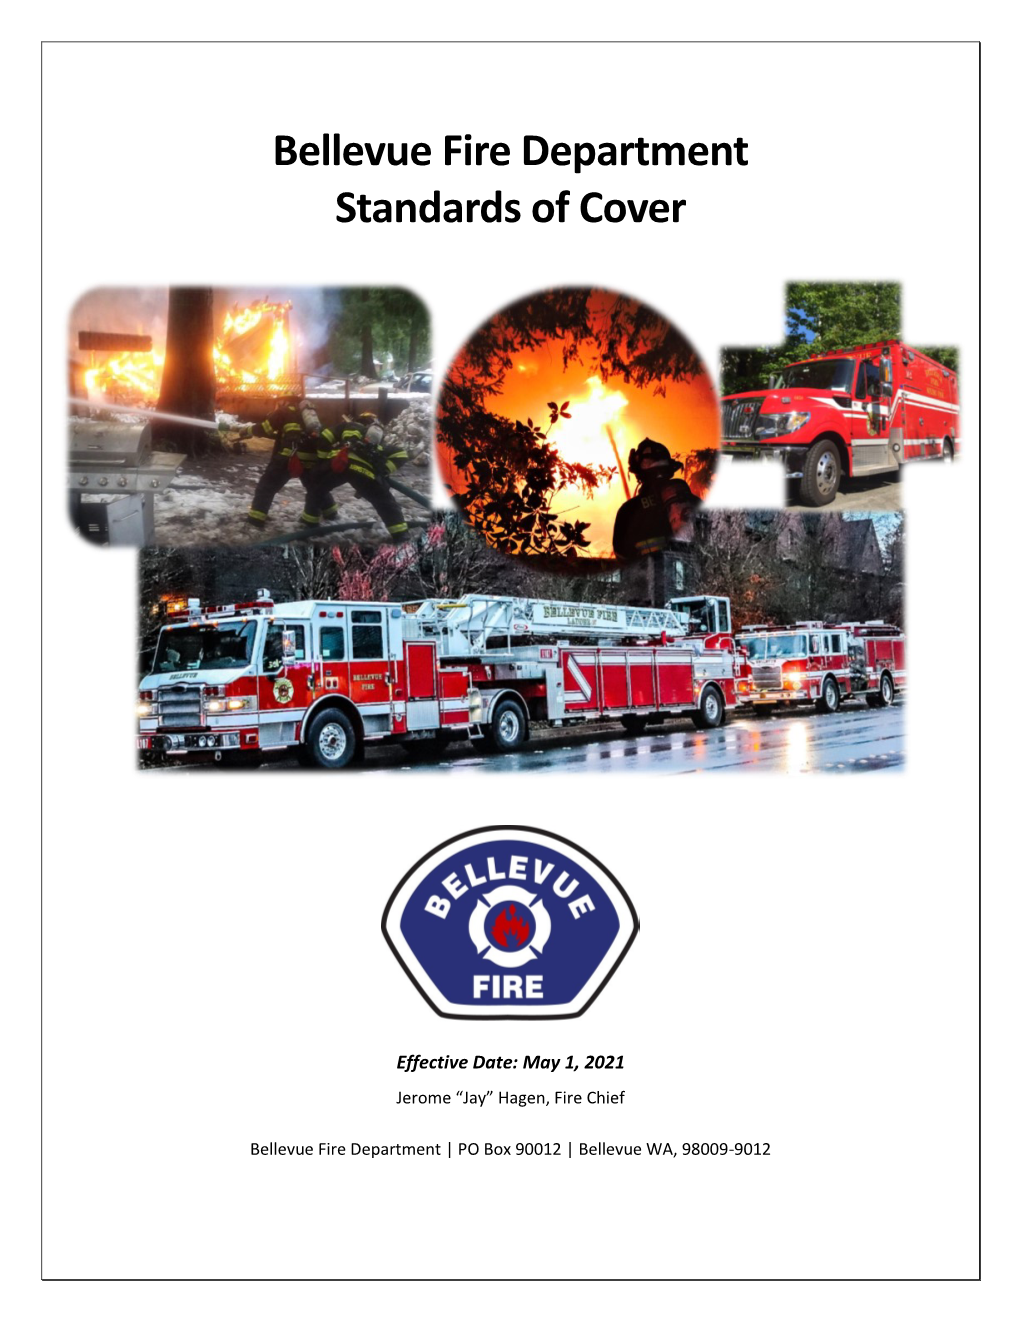 Bellevue Fire Department Standards of Cover